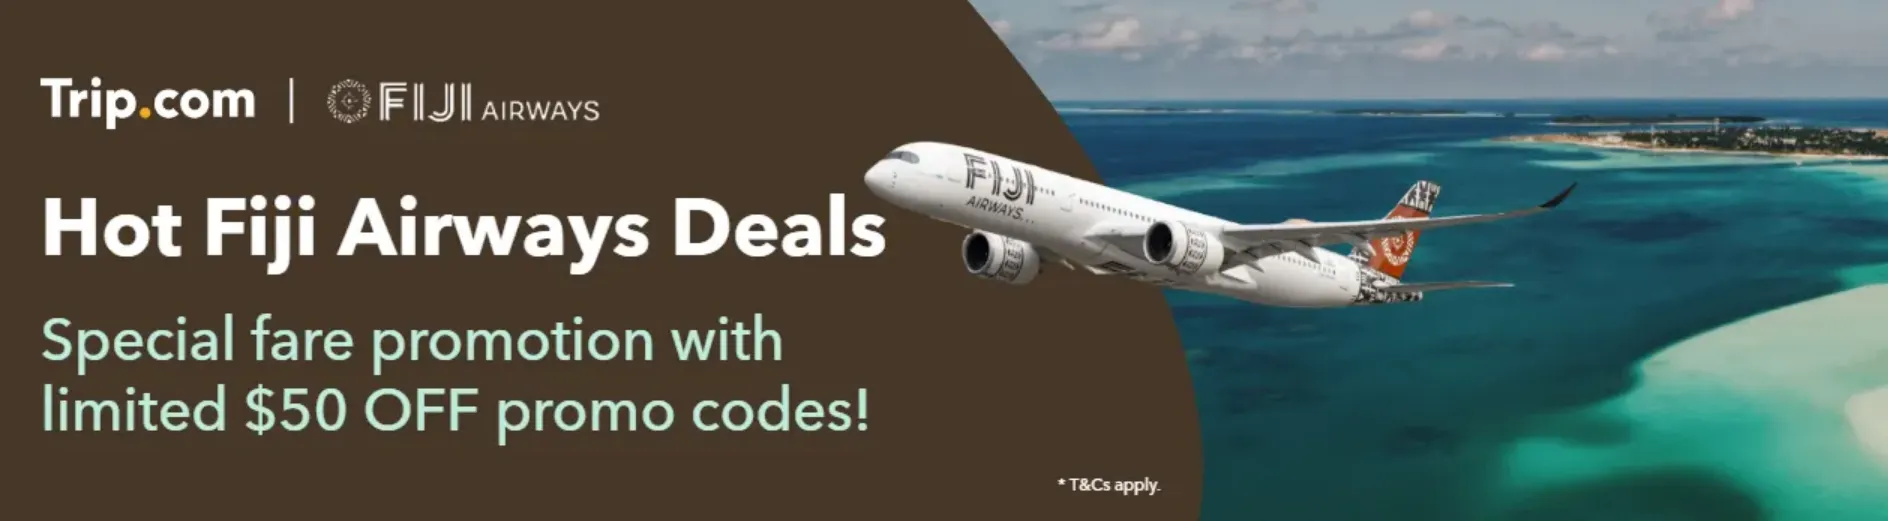 Trip.com Promo Code Australia: Fiji Airways